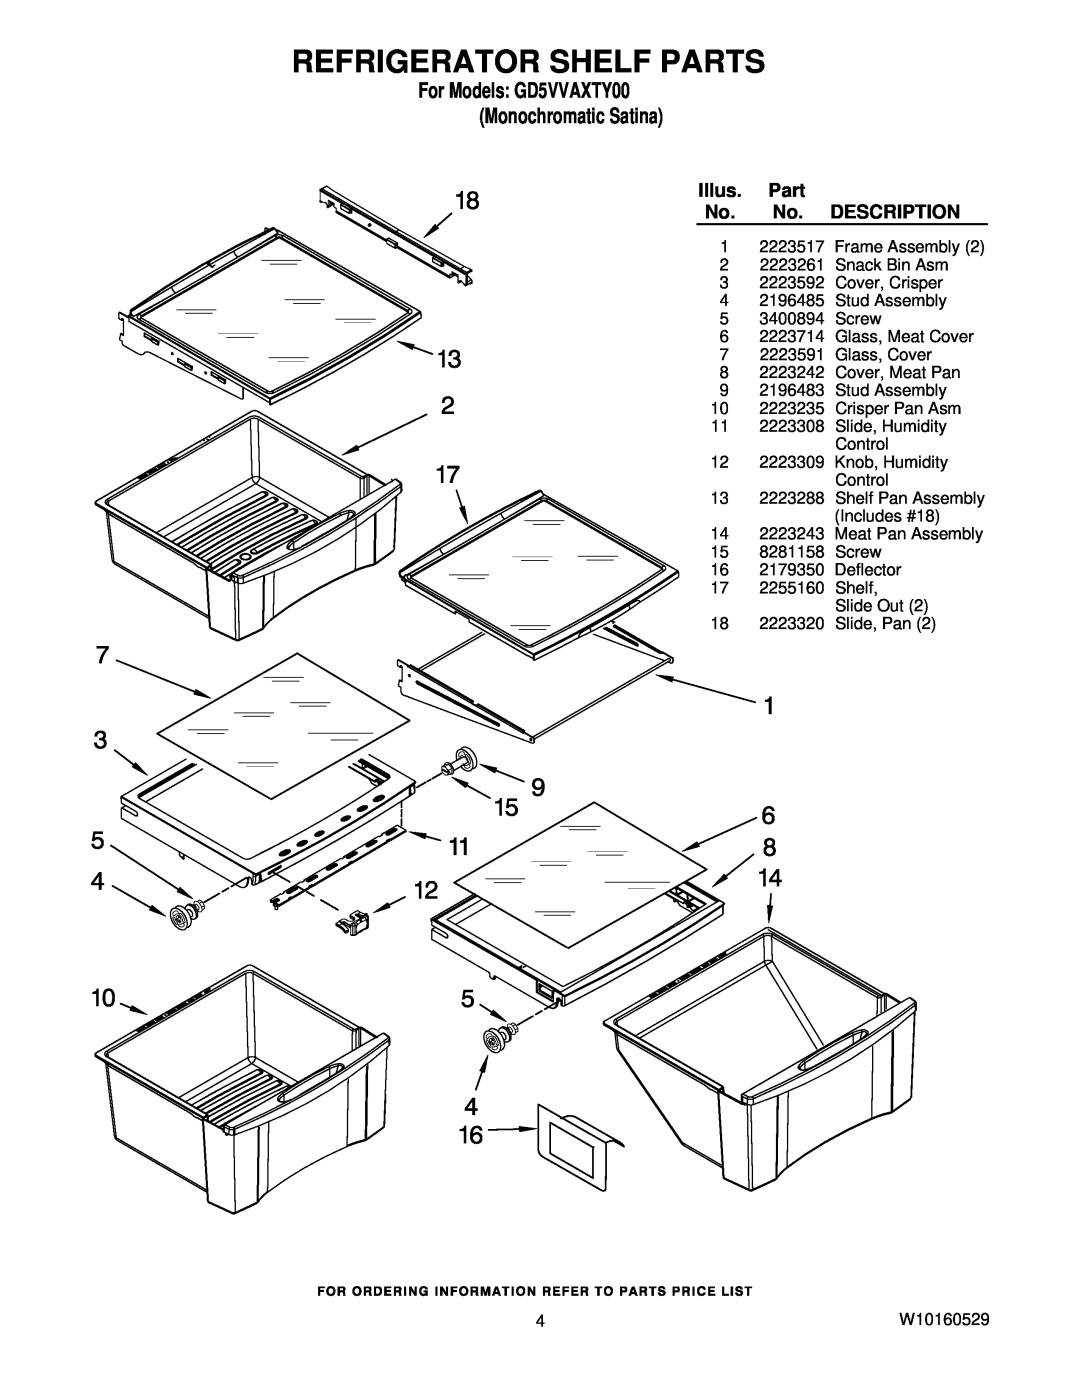 Whirlpool manual Refrigerator Shelf Parts, For Models GD5VVAXTY00 Monochromatic Satina, Illus, Description 